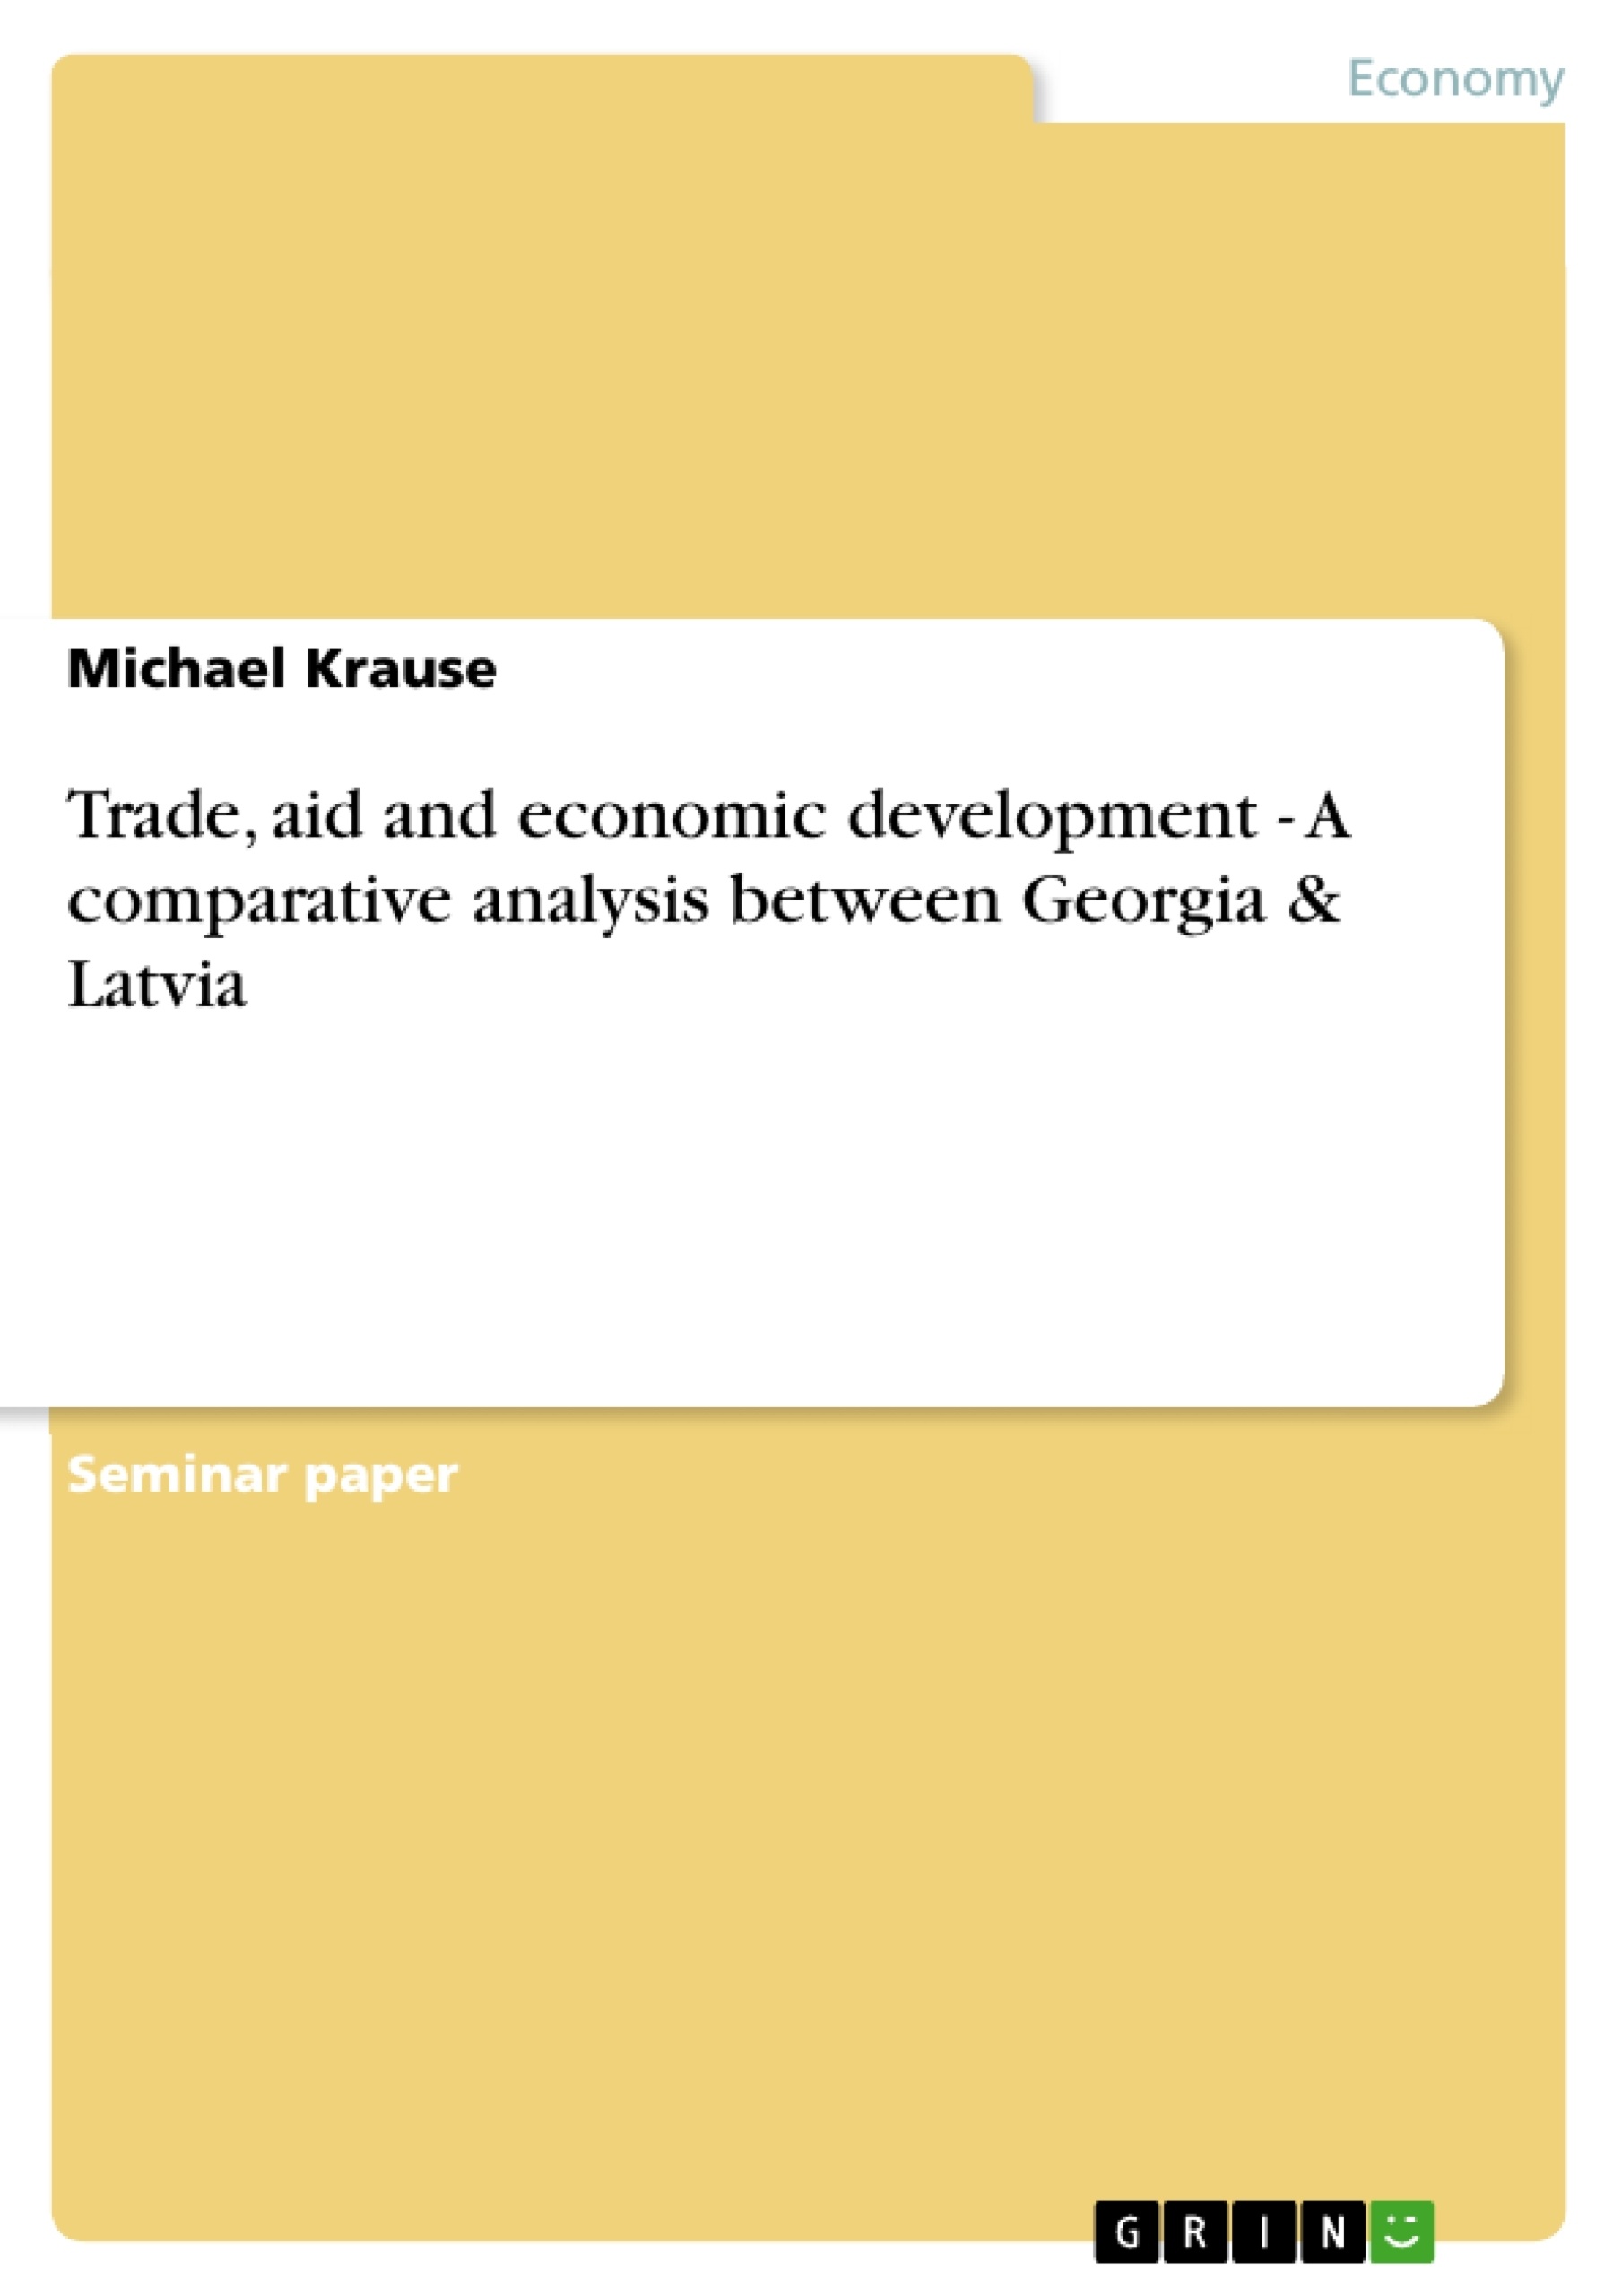 Title: Trade, aid and economic development - A comparative analysis between Georgia & Latvia